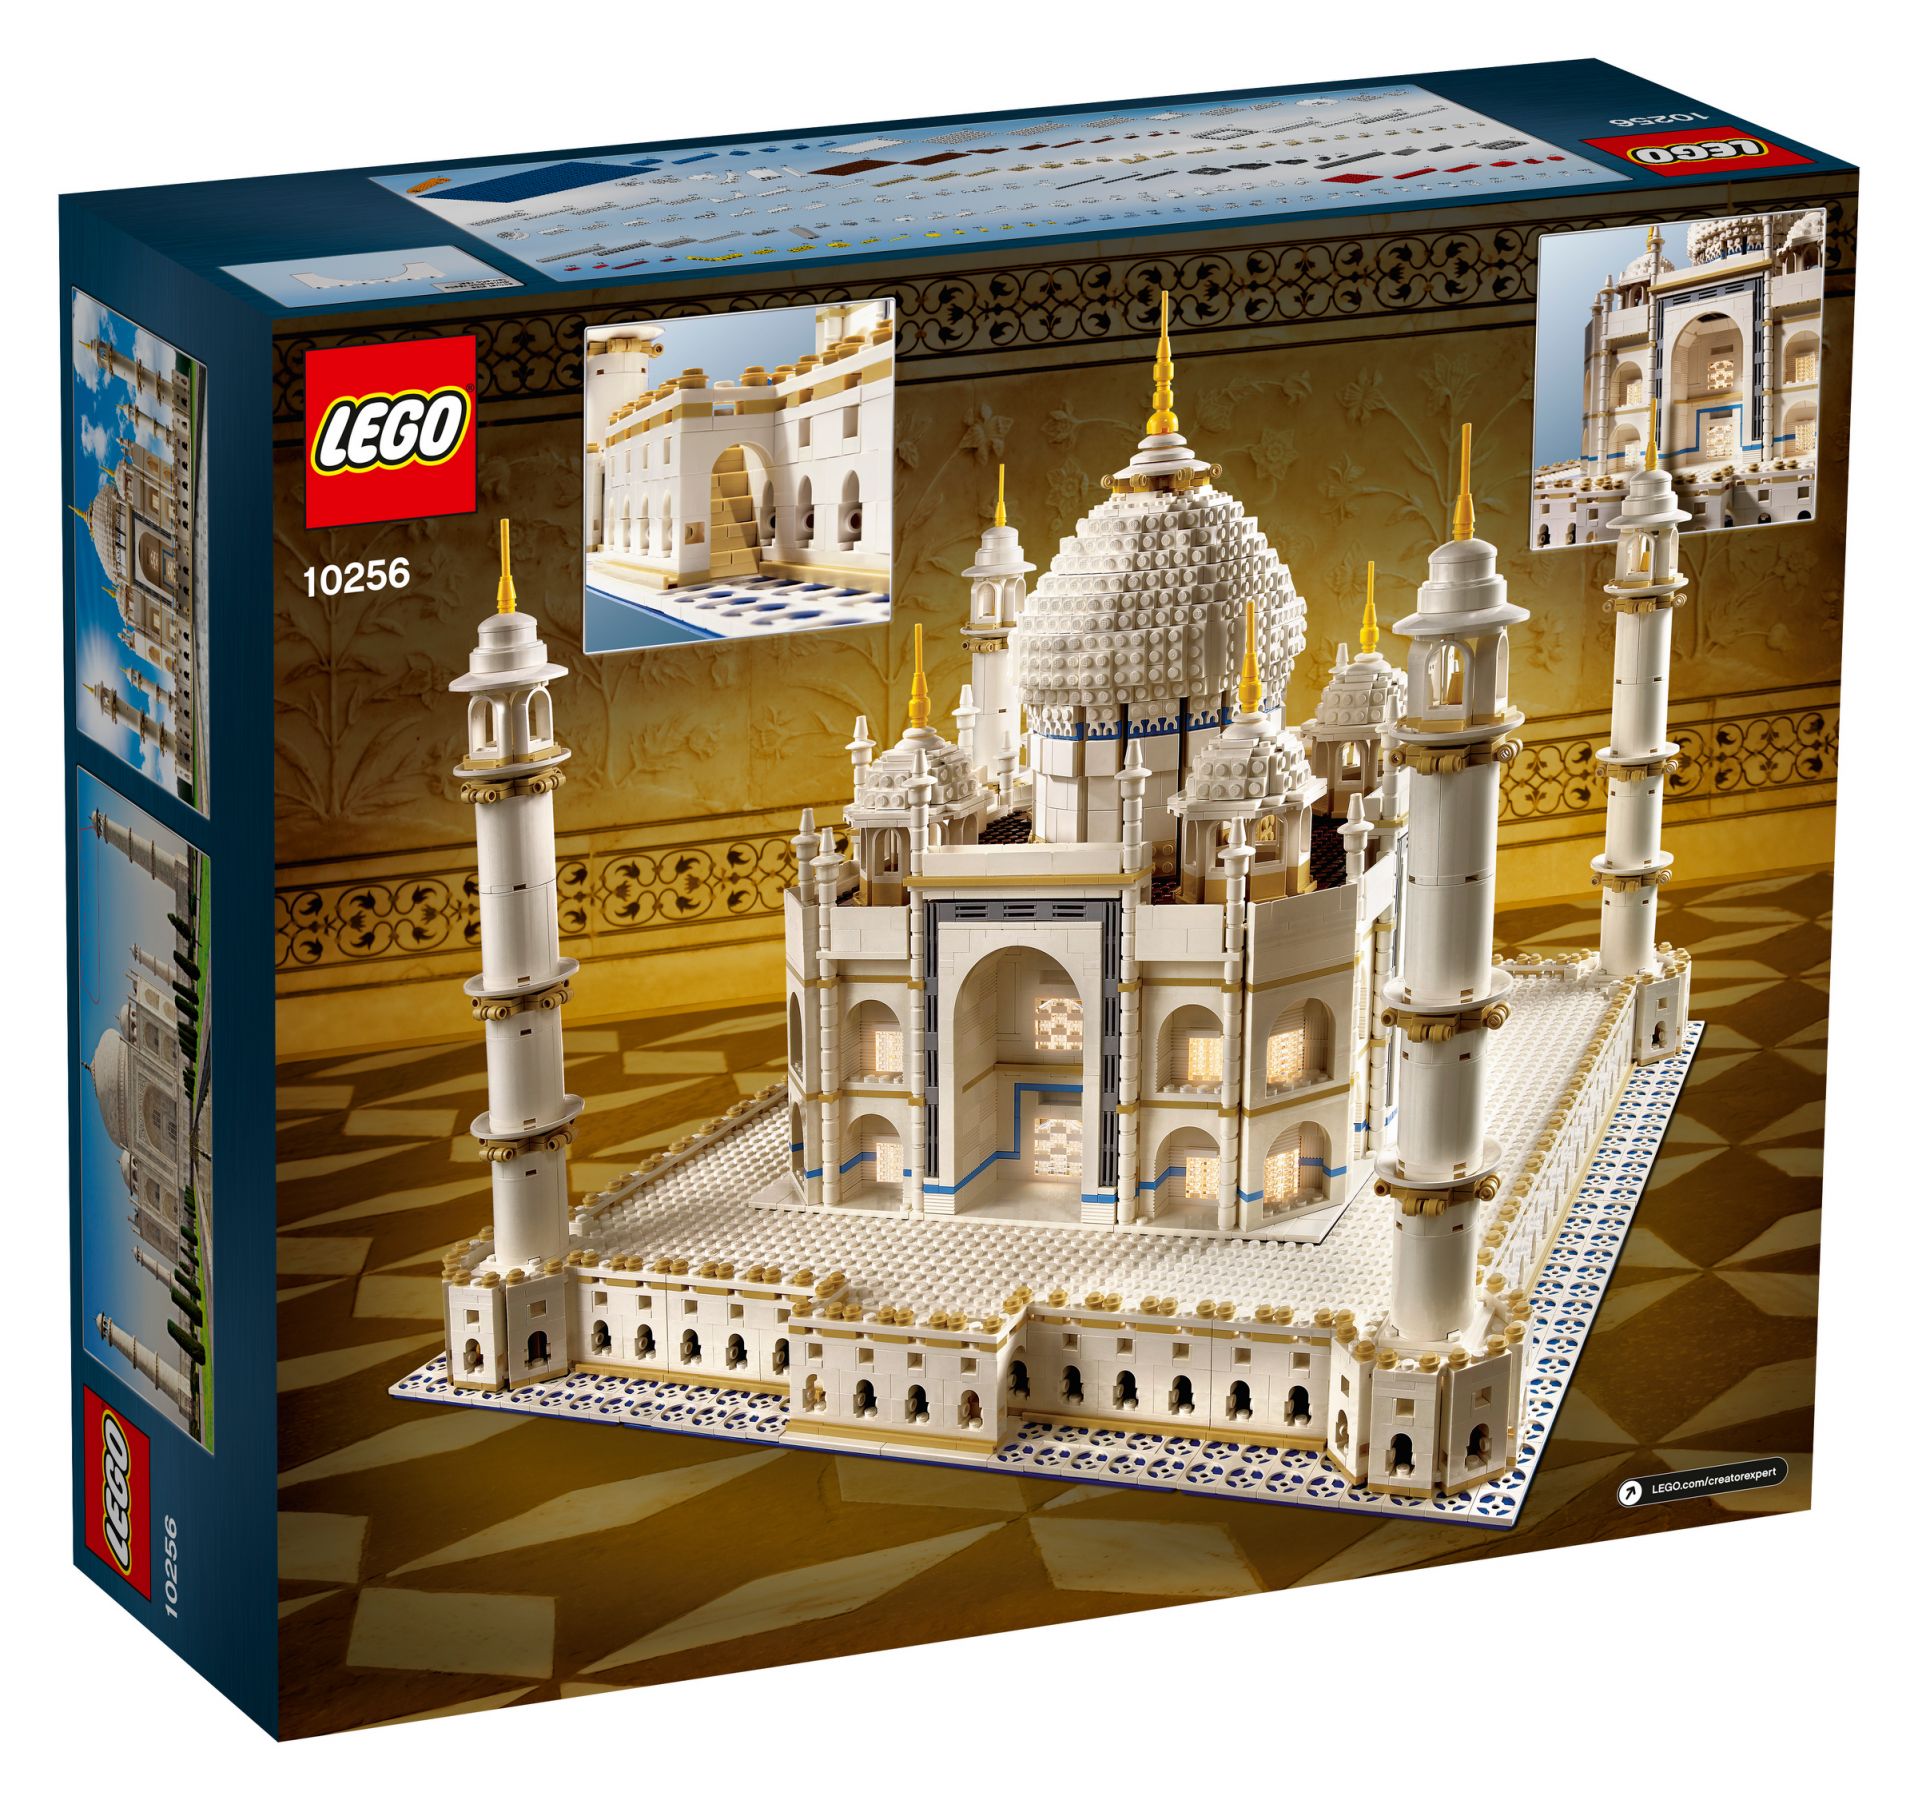 LEGO Advanced Models 10256 Taj Mahal LEGO_10256_alt2.jpg